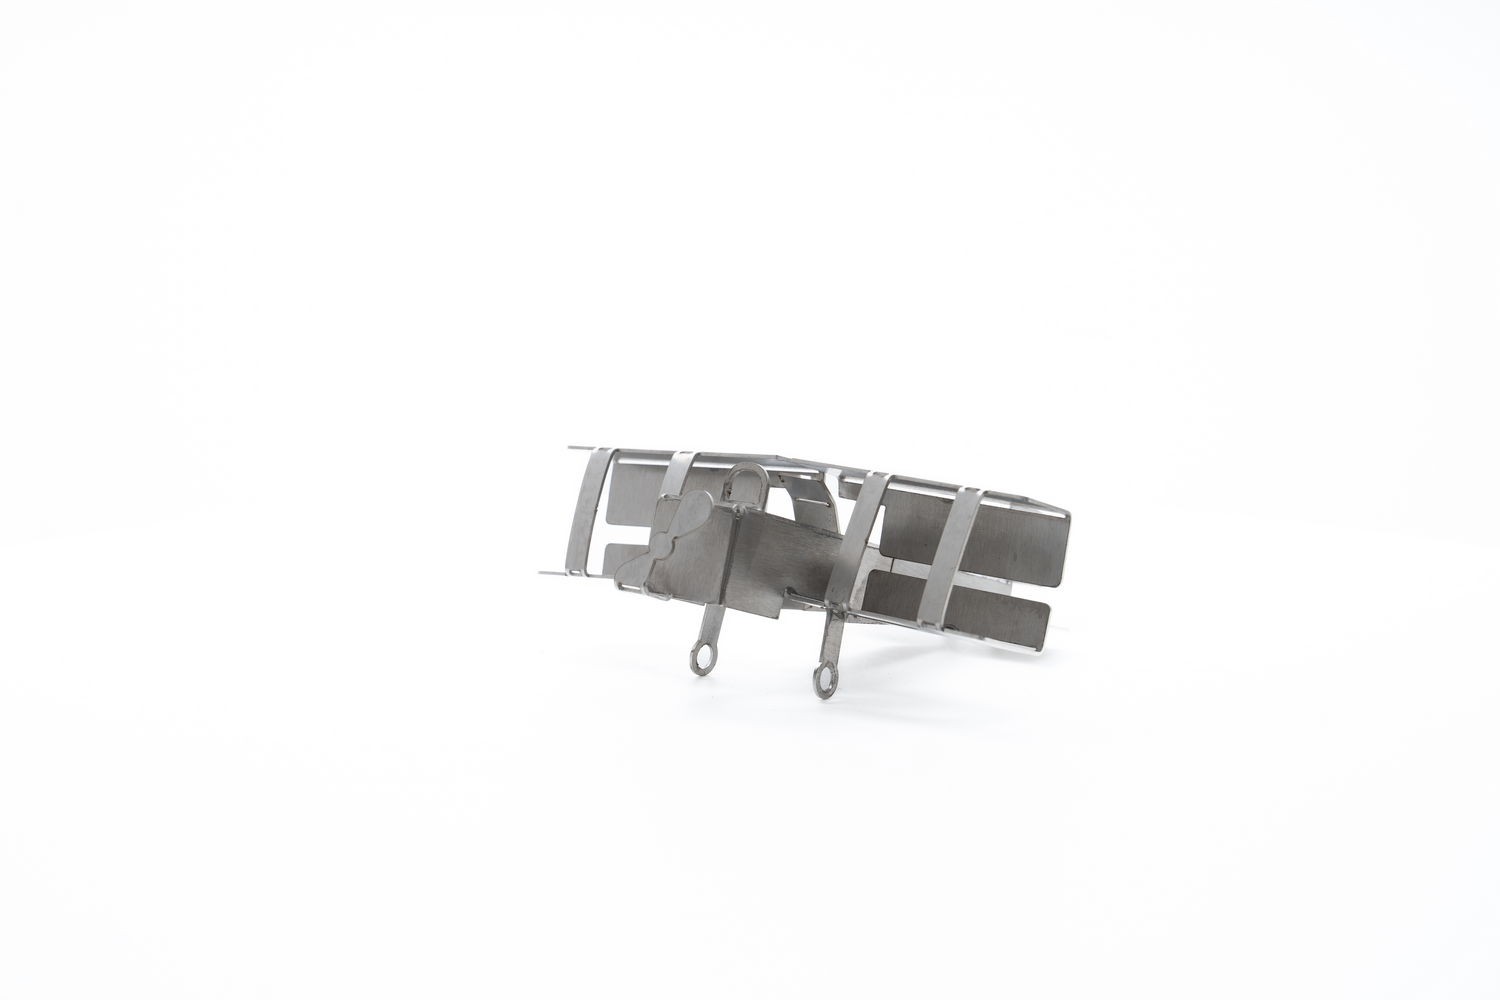 RVS Origami Vliegtuig - Standbeeldje | 22 cm x 18 cm | Woonaccessoires